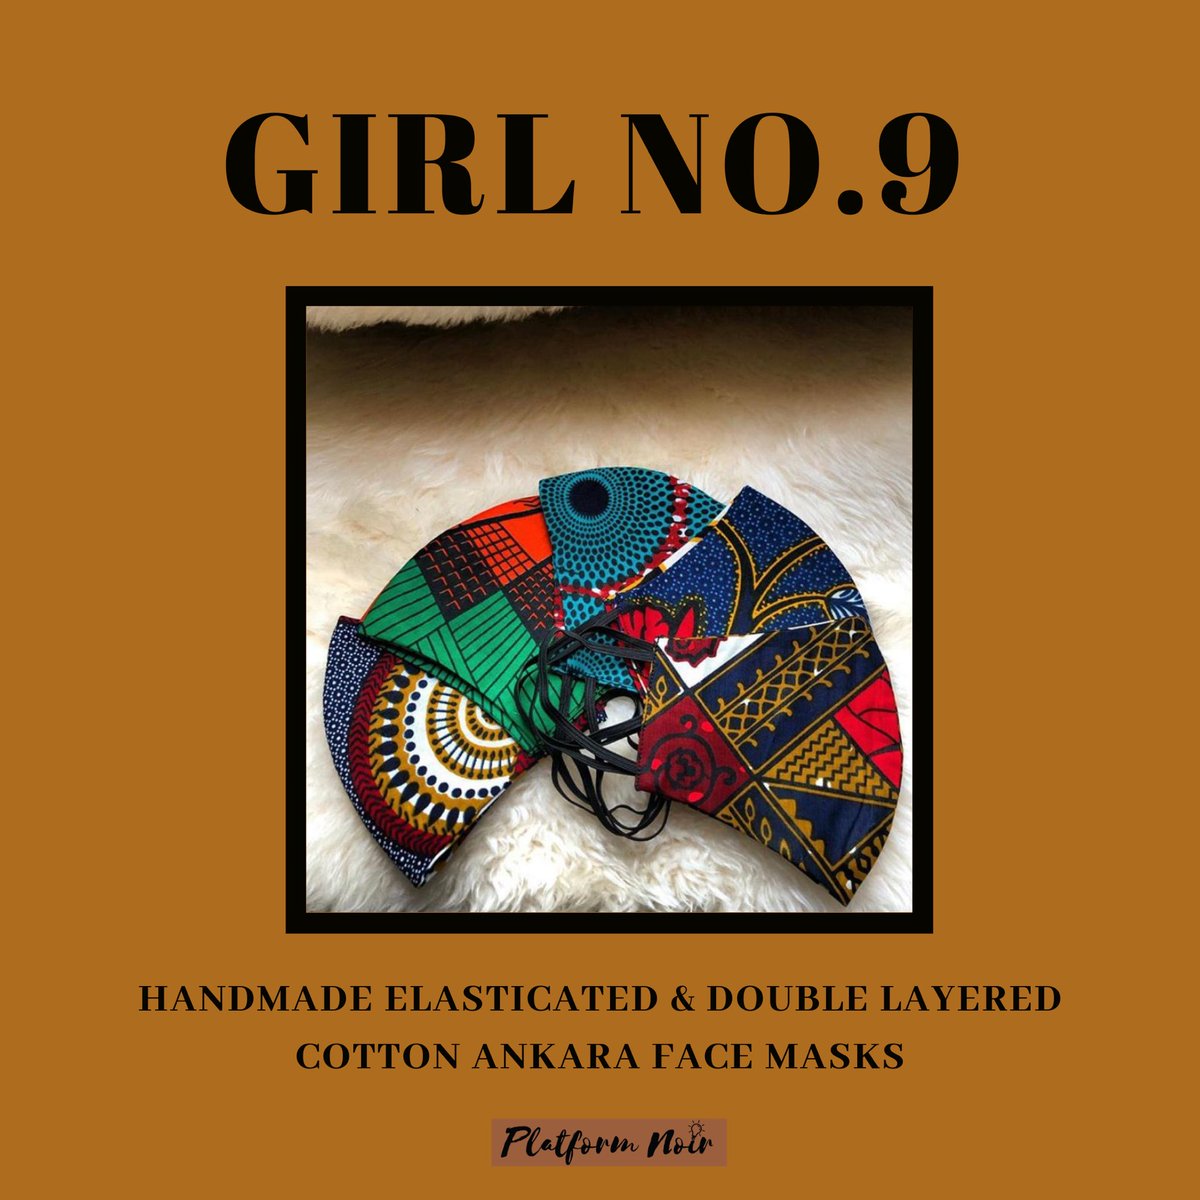 Girl No.9Handmade elasticated & double layered cotton Ankara face masks https://www.etsy.com/shop/girlnumber9/ https://instagram.com/girlno.9?igshid=yoh9tguhmaak